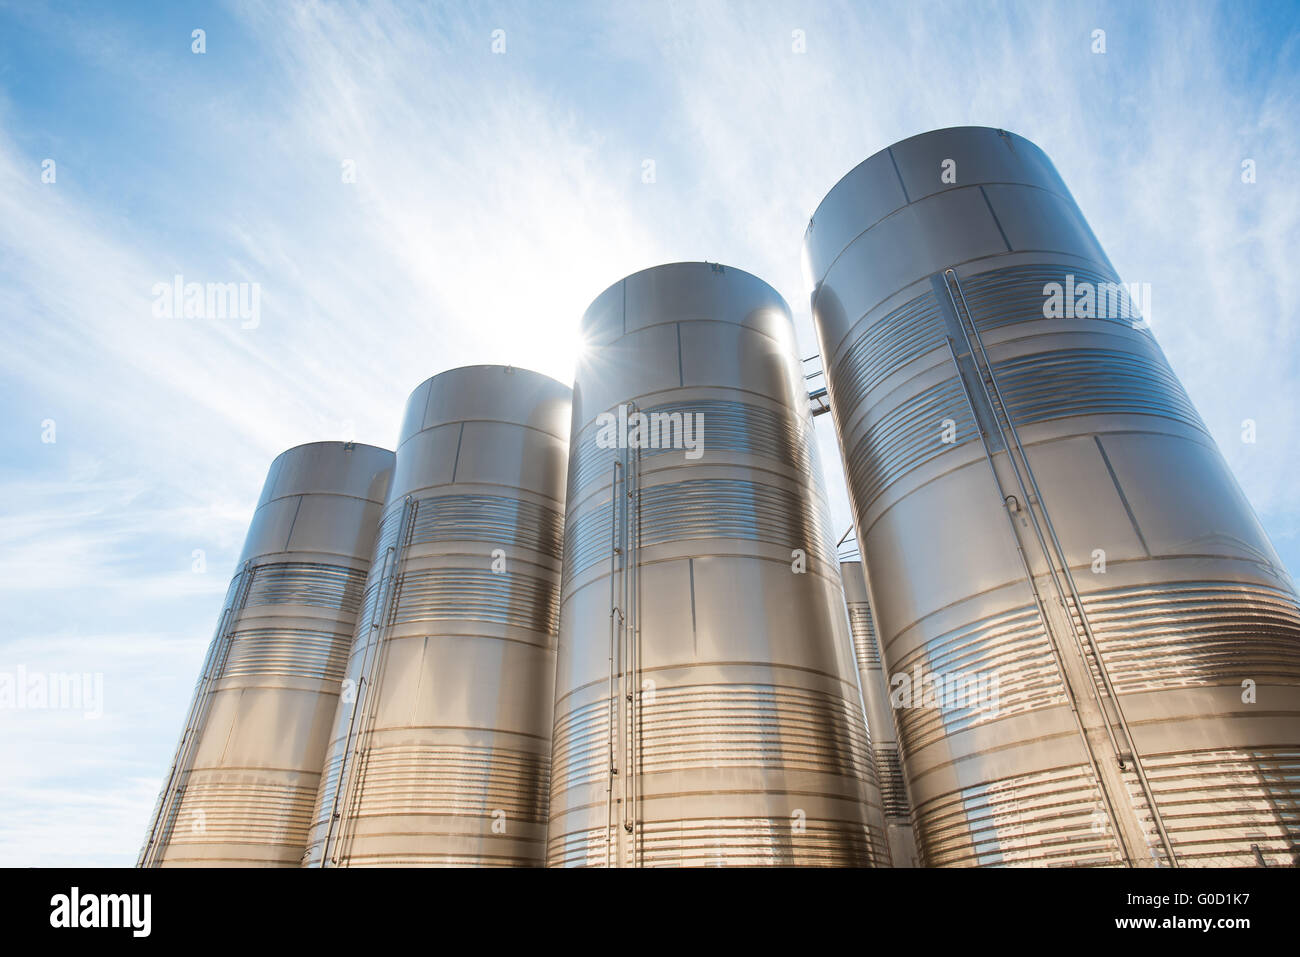 stainless steel silos Stock Photo